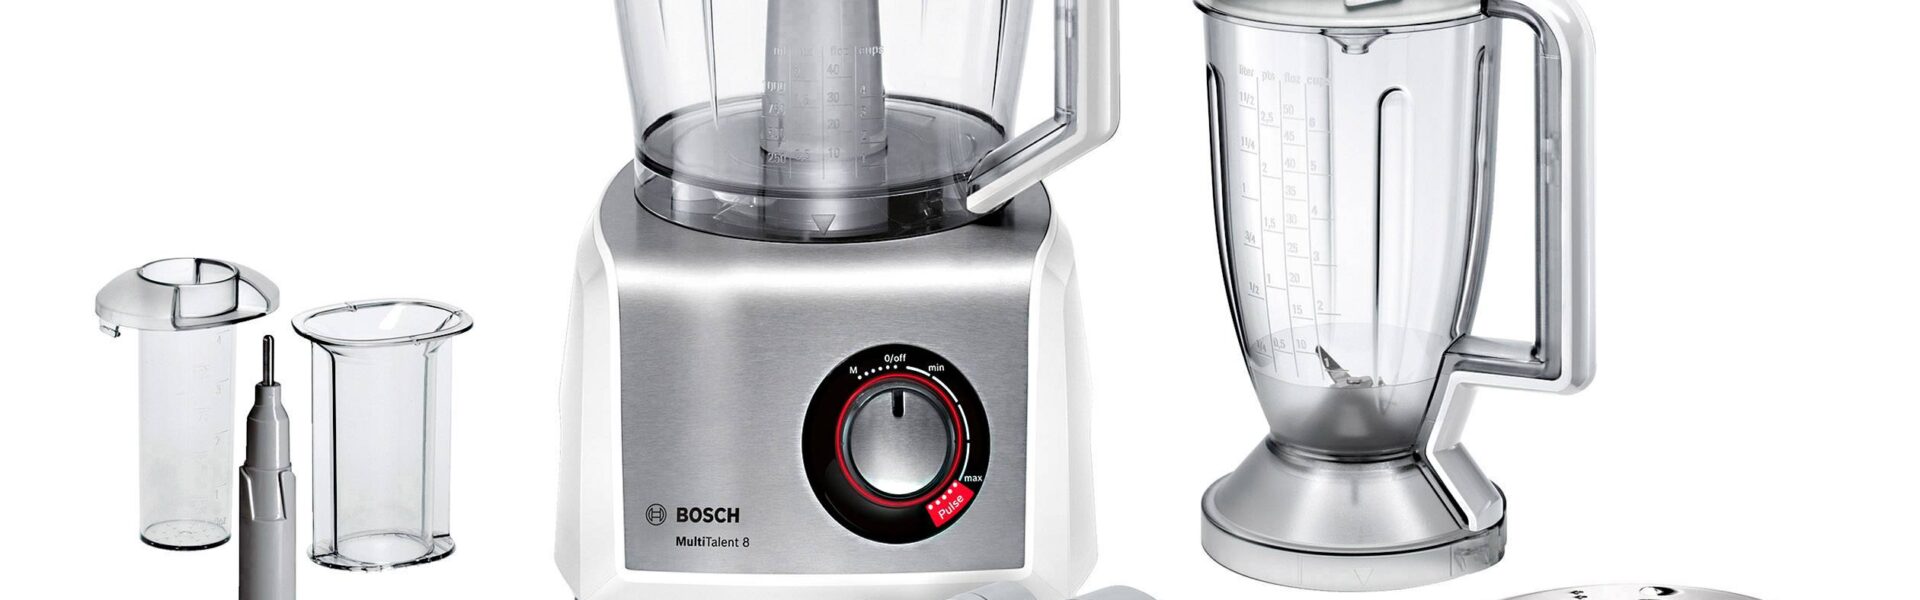 Kuchynský robot Bosch Haushalt MC812S814, 1250 W, strieborná, biela